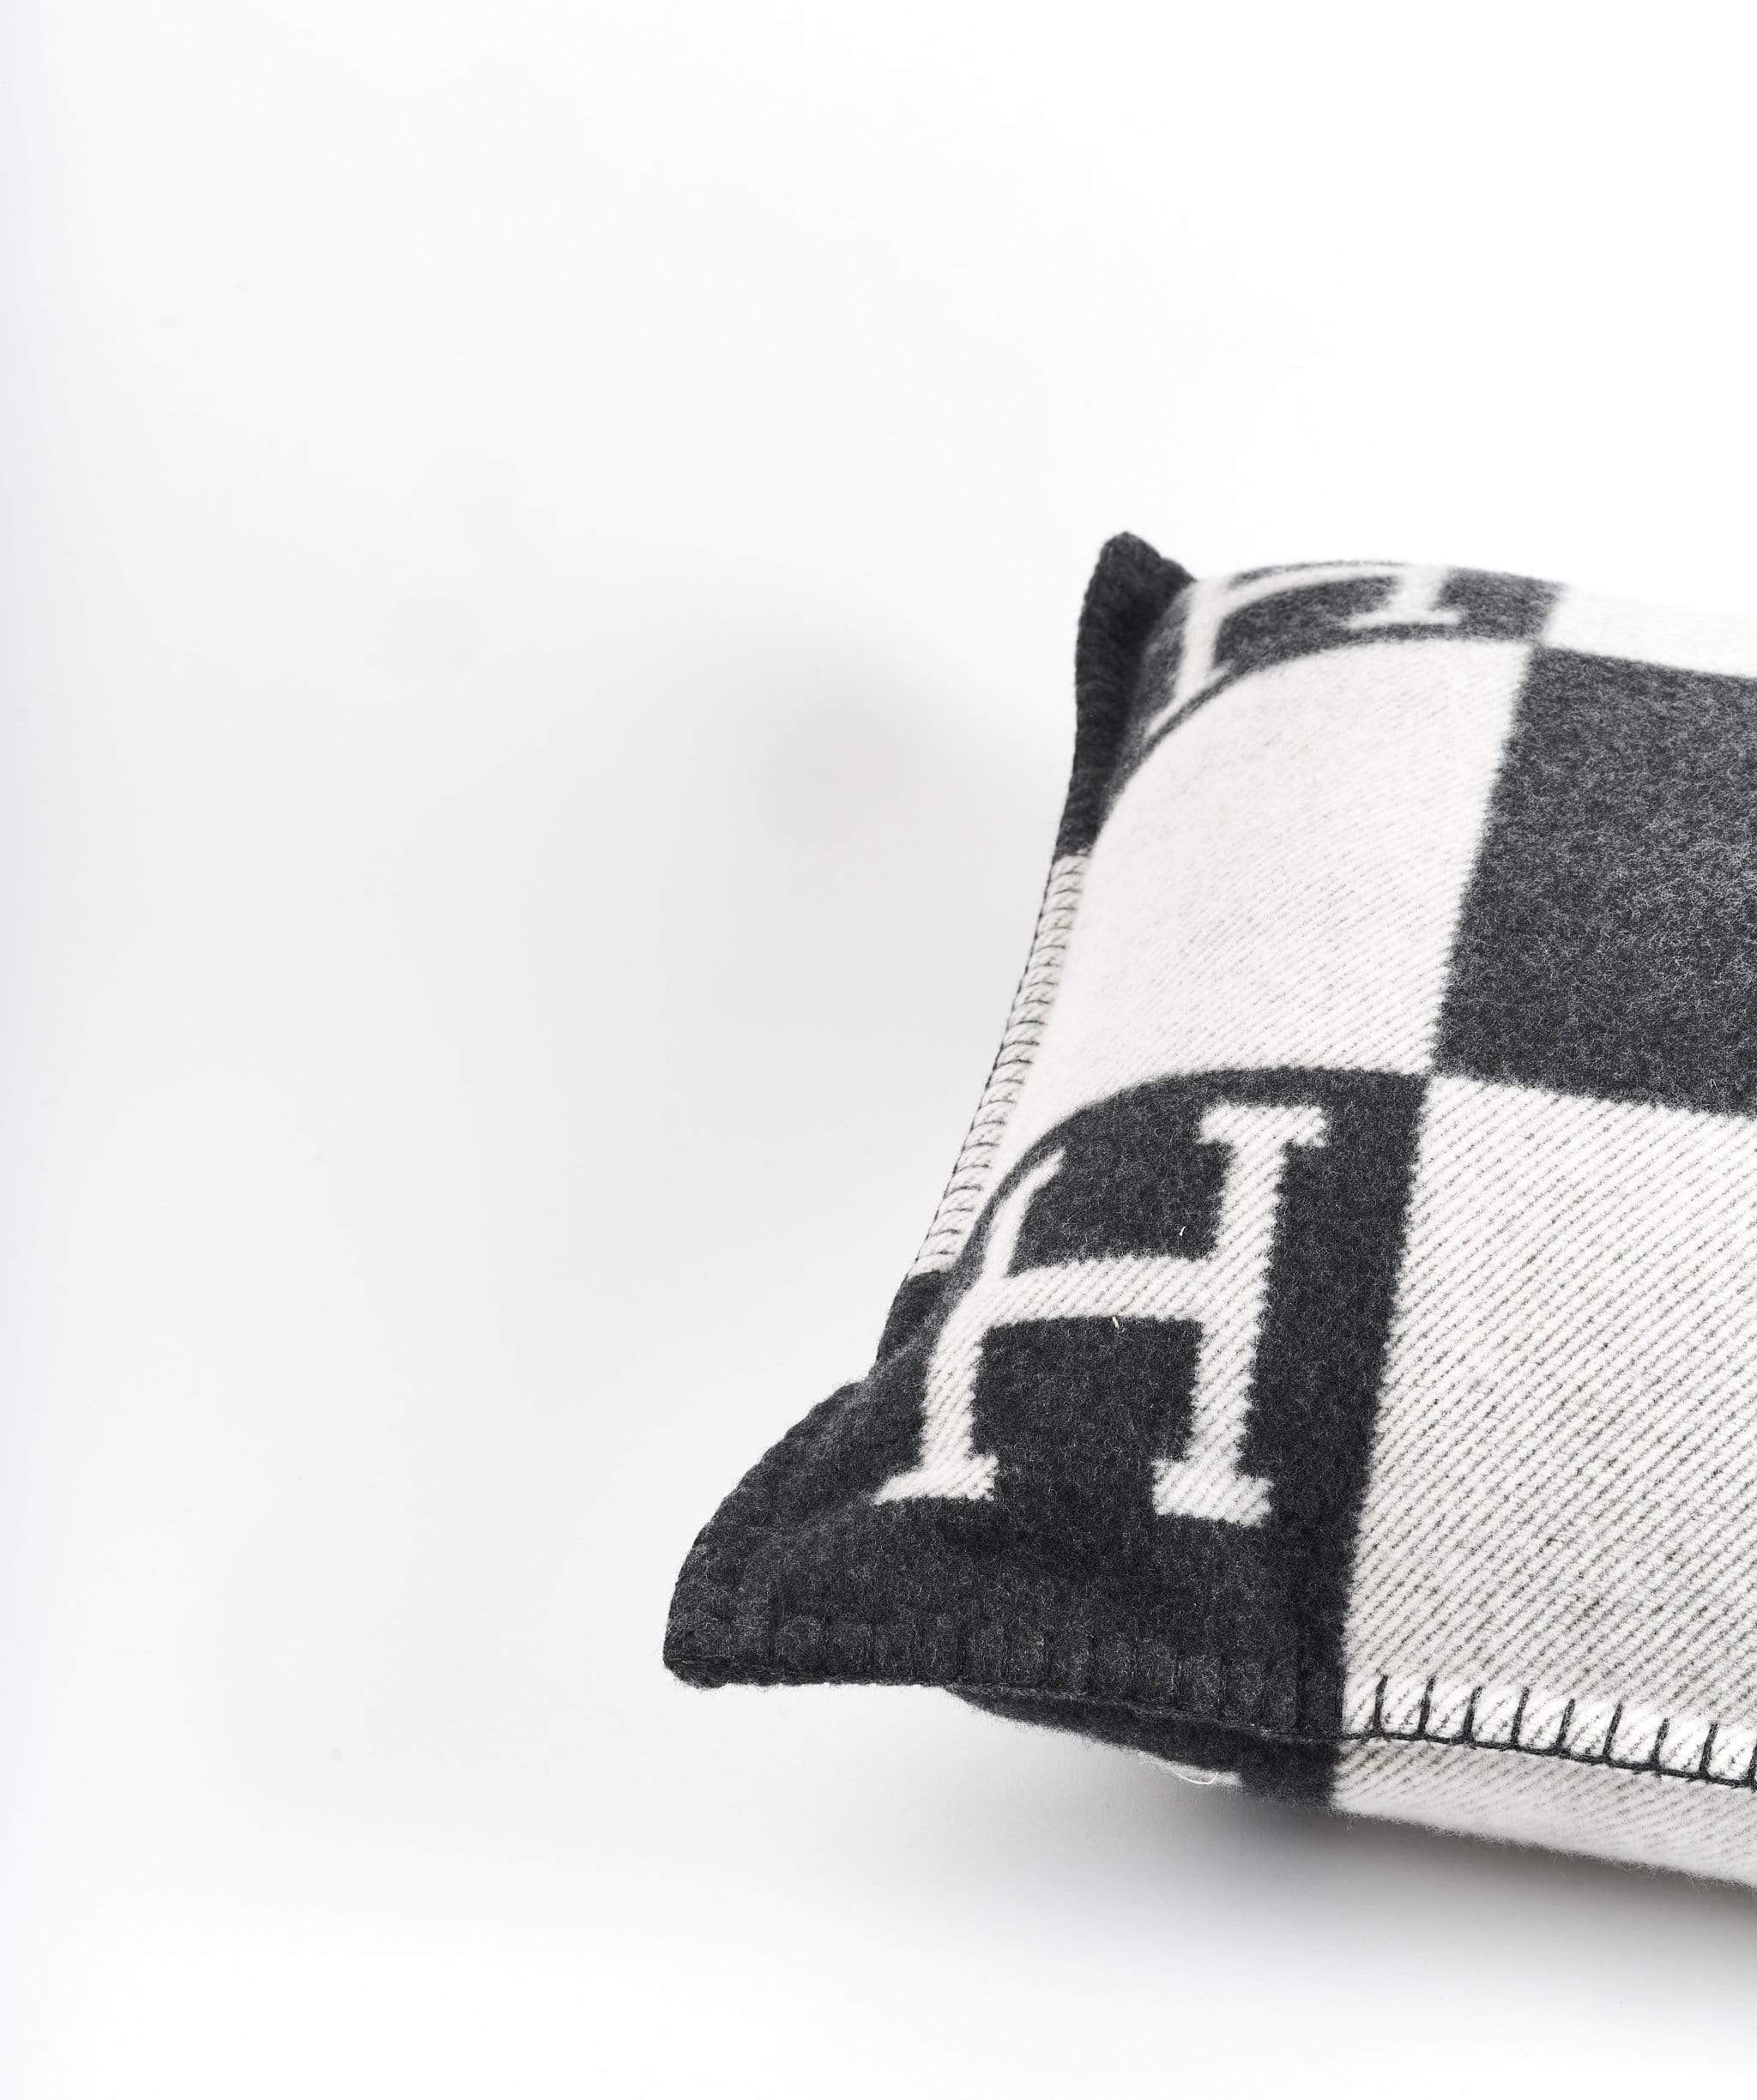 Hermès Hermes Avalon pillow in dark grey and white